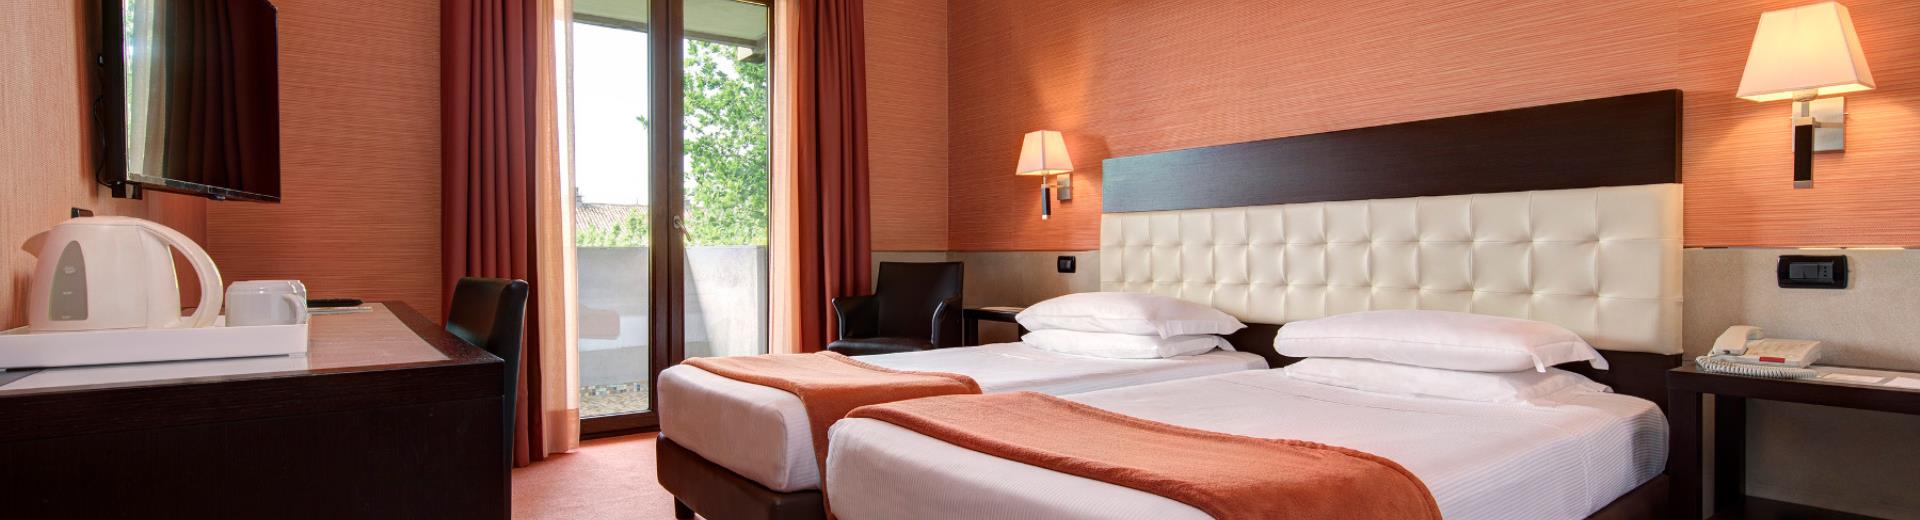 Twin Room -  Best Western Gorizia Palace Hotel